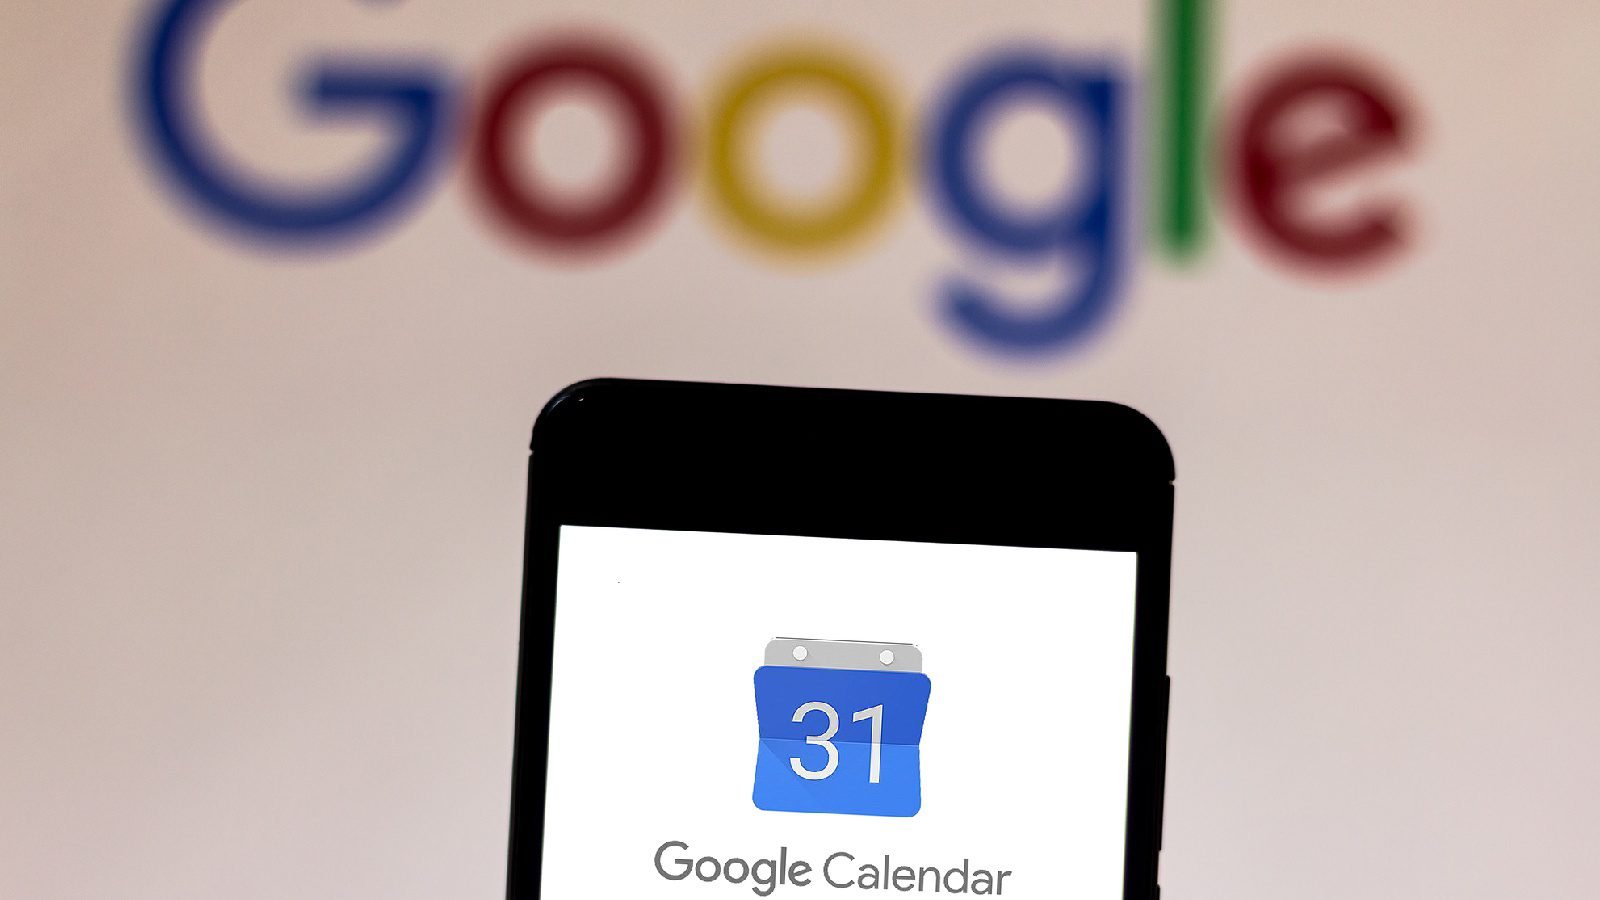 Google adds a new "Focus Time" feature in Google Calendar